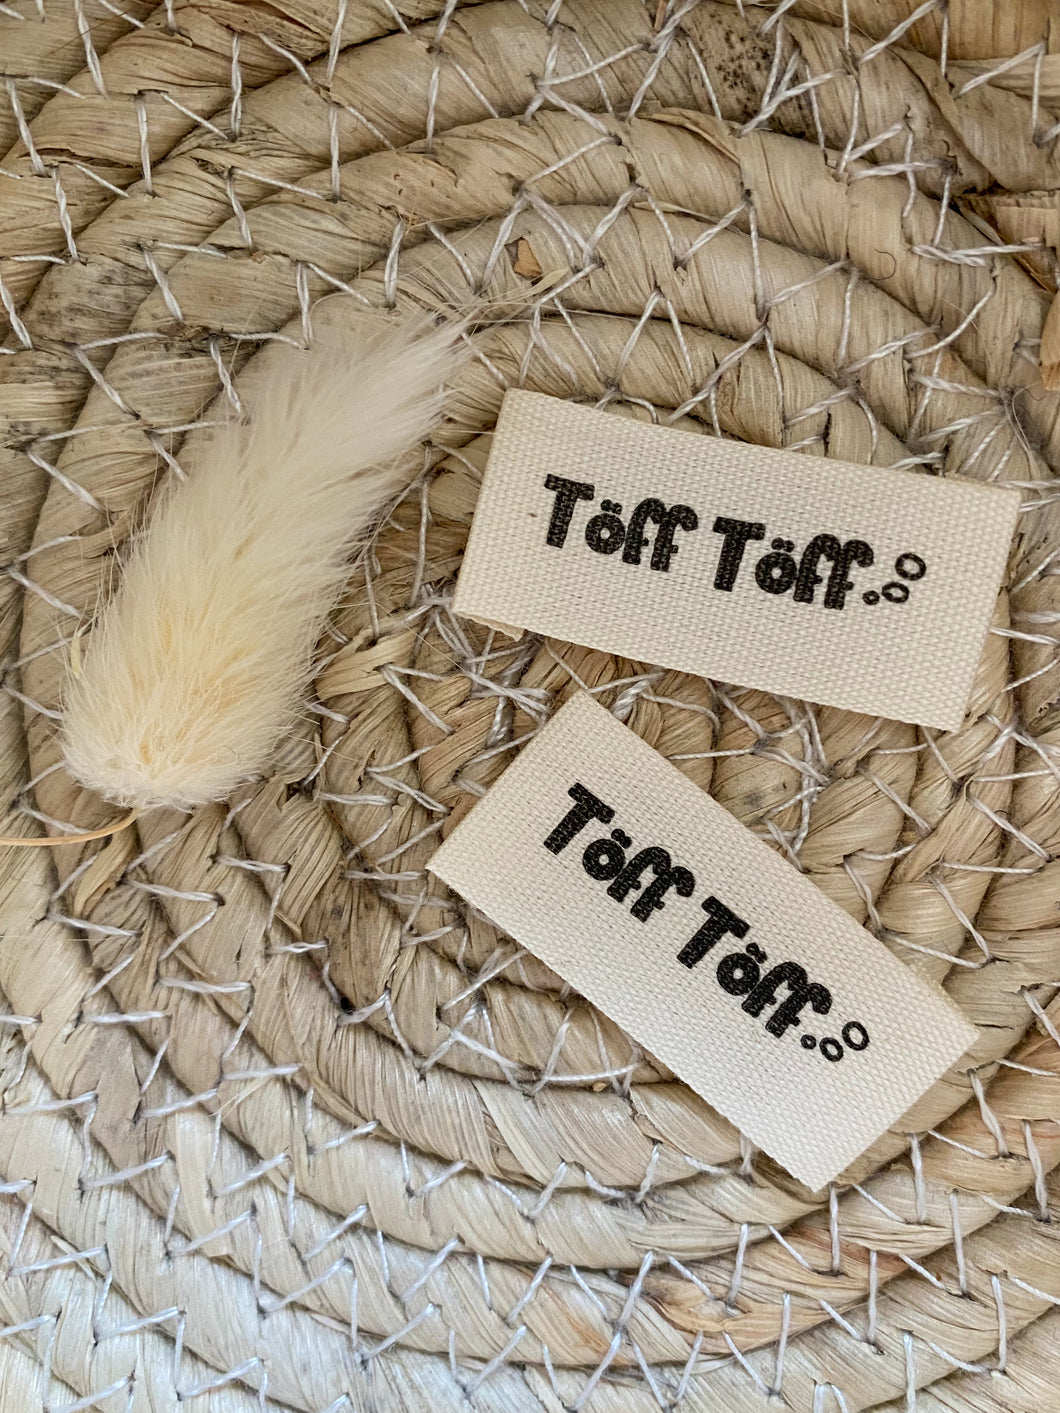 Töff Töff -  Baumwoll Label